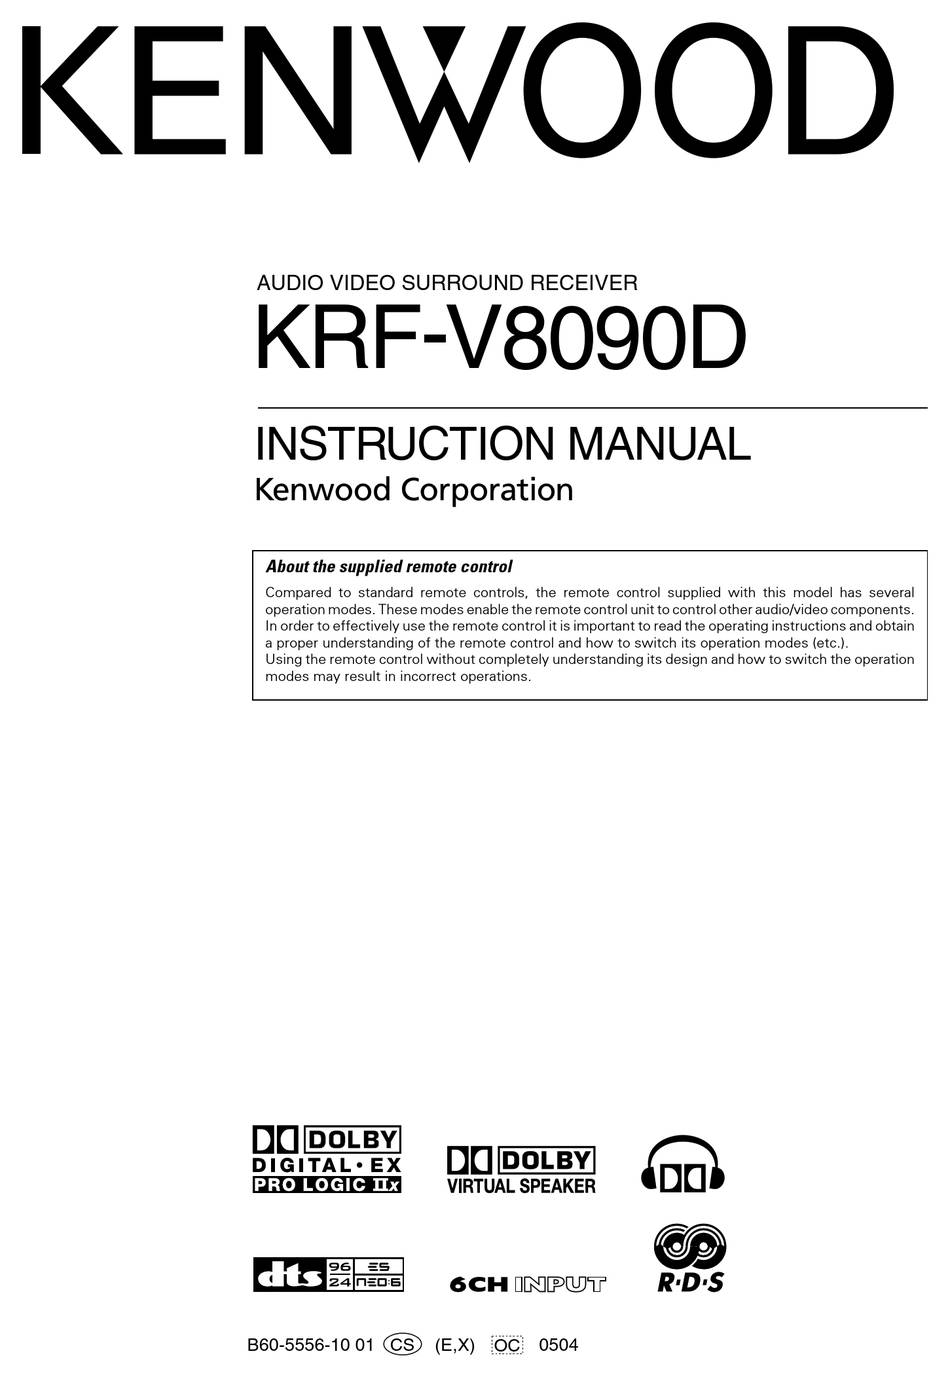 Kenwood KRF-V8090D